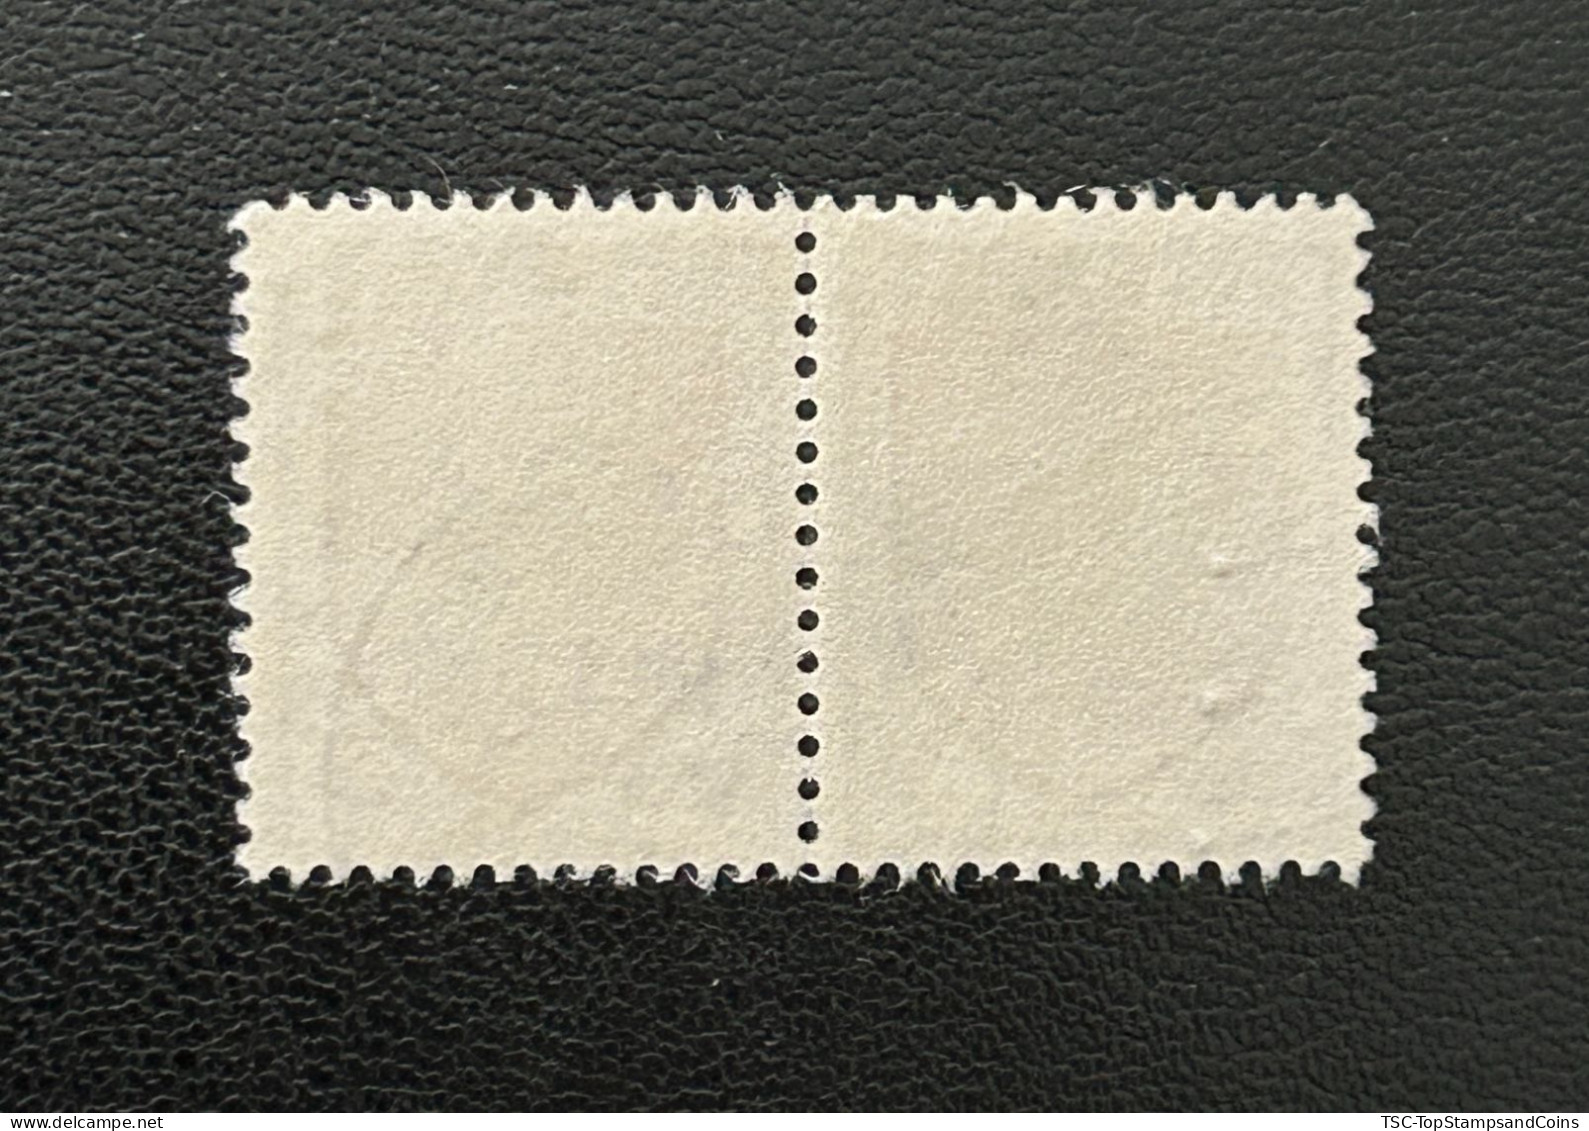 FRA1004Ux2h2 - Armoiries De Provinces (VII) - Aunis - Pair Of 3 F Used Stamps - 1954 - France YT 1004 - 1941-66 Escudos Y Blasones